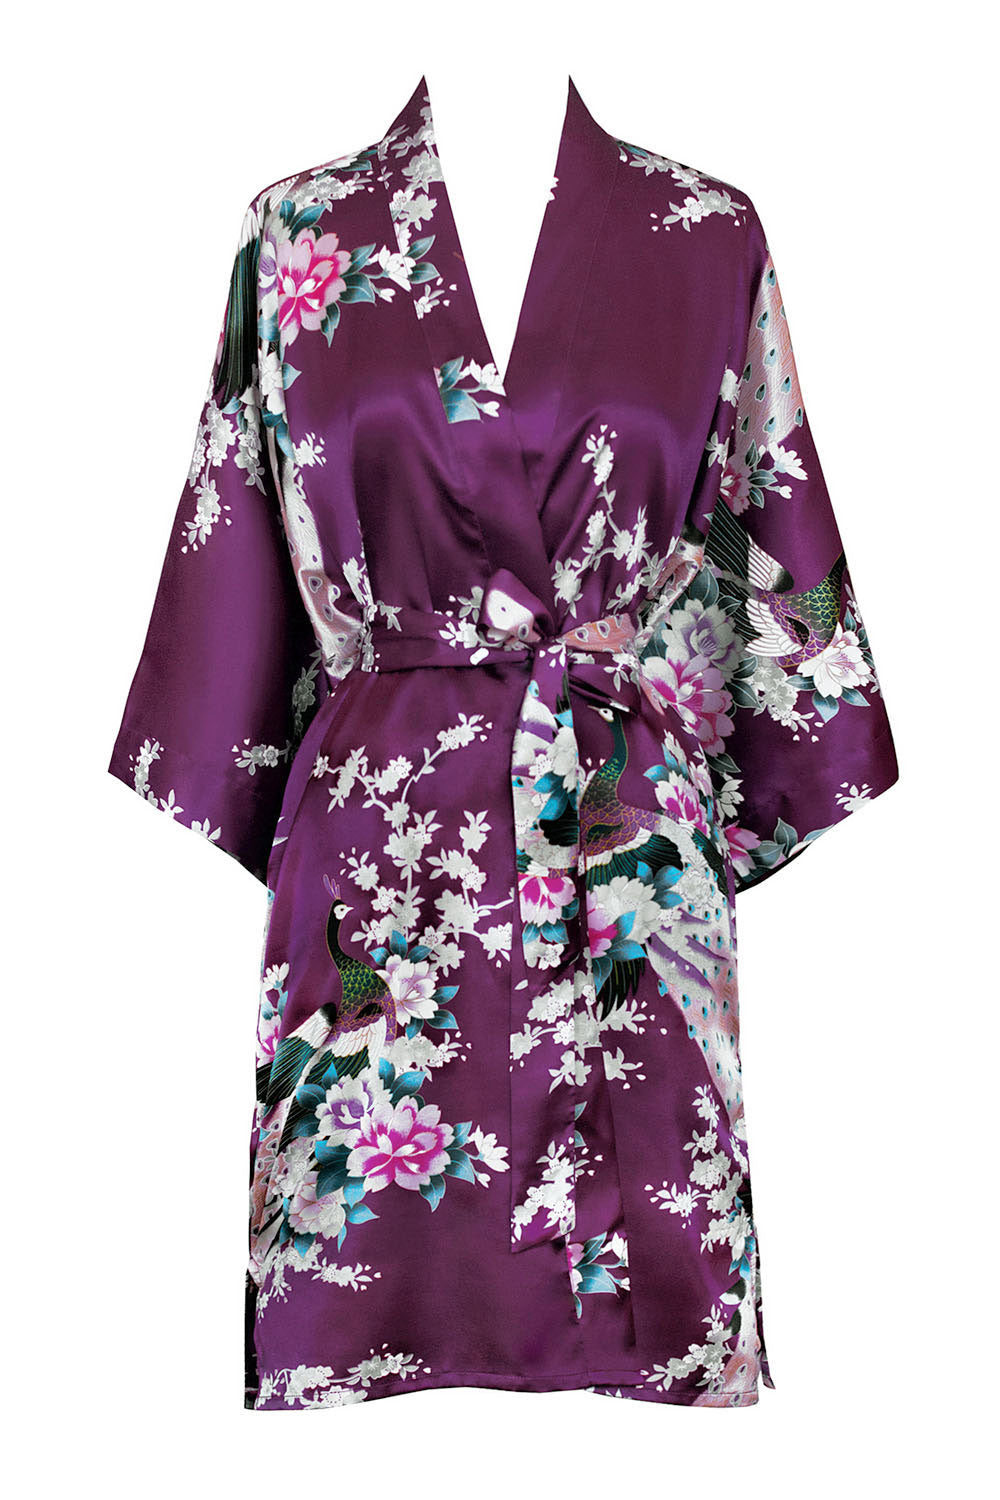 KIM+ONO Peacock & Blossoms Short Kimono Robe